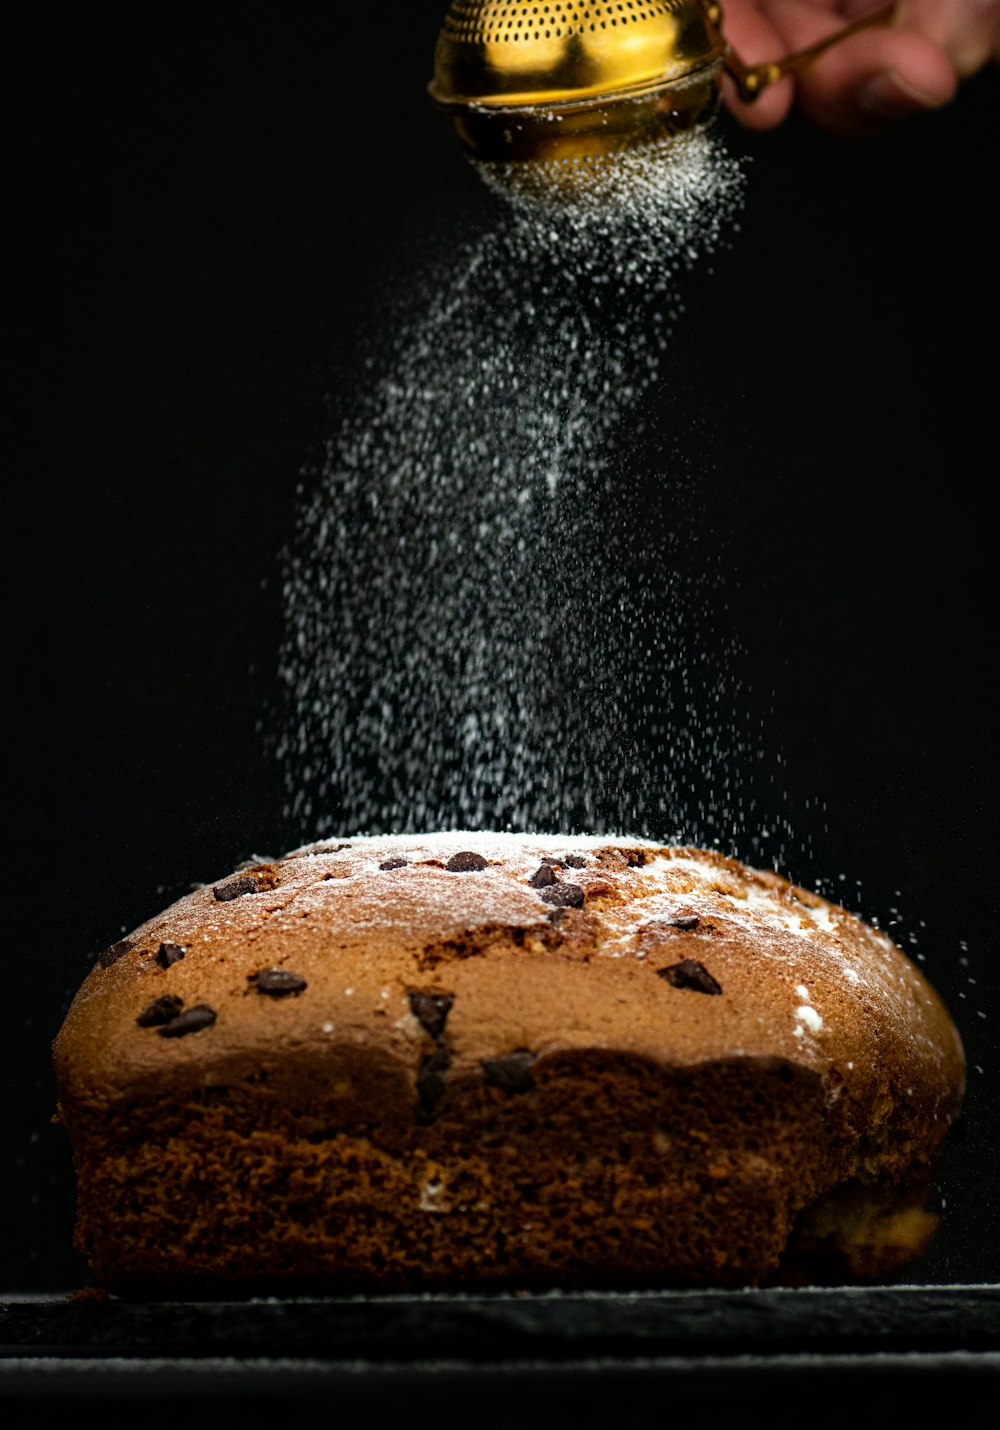 a person sprinkles sugar on a cake